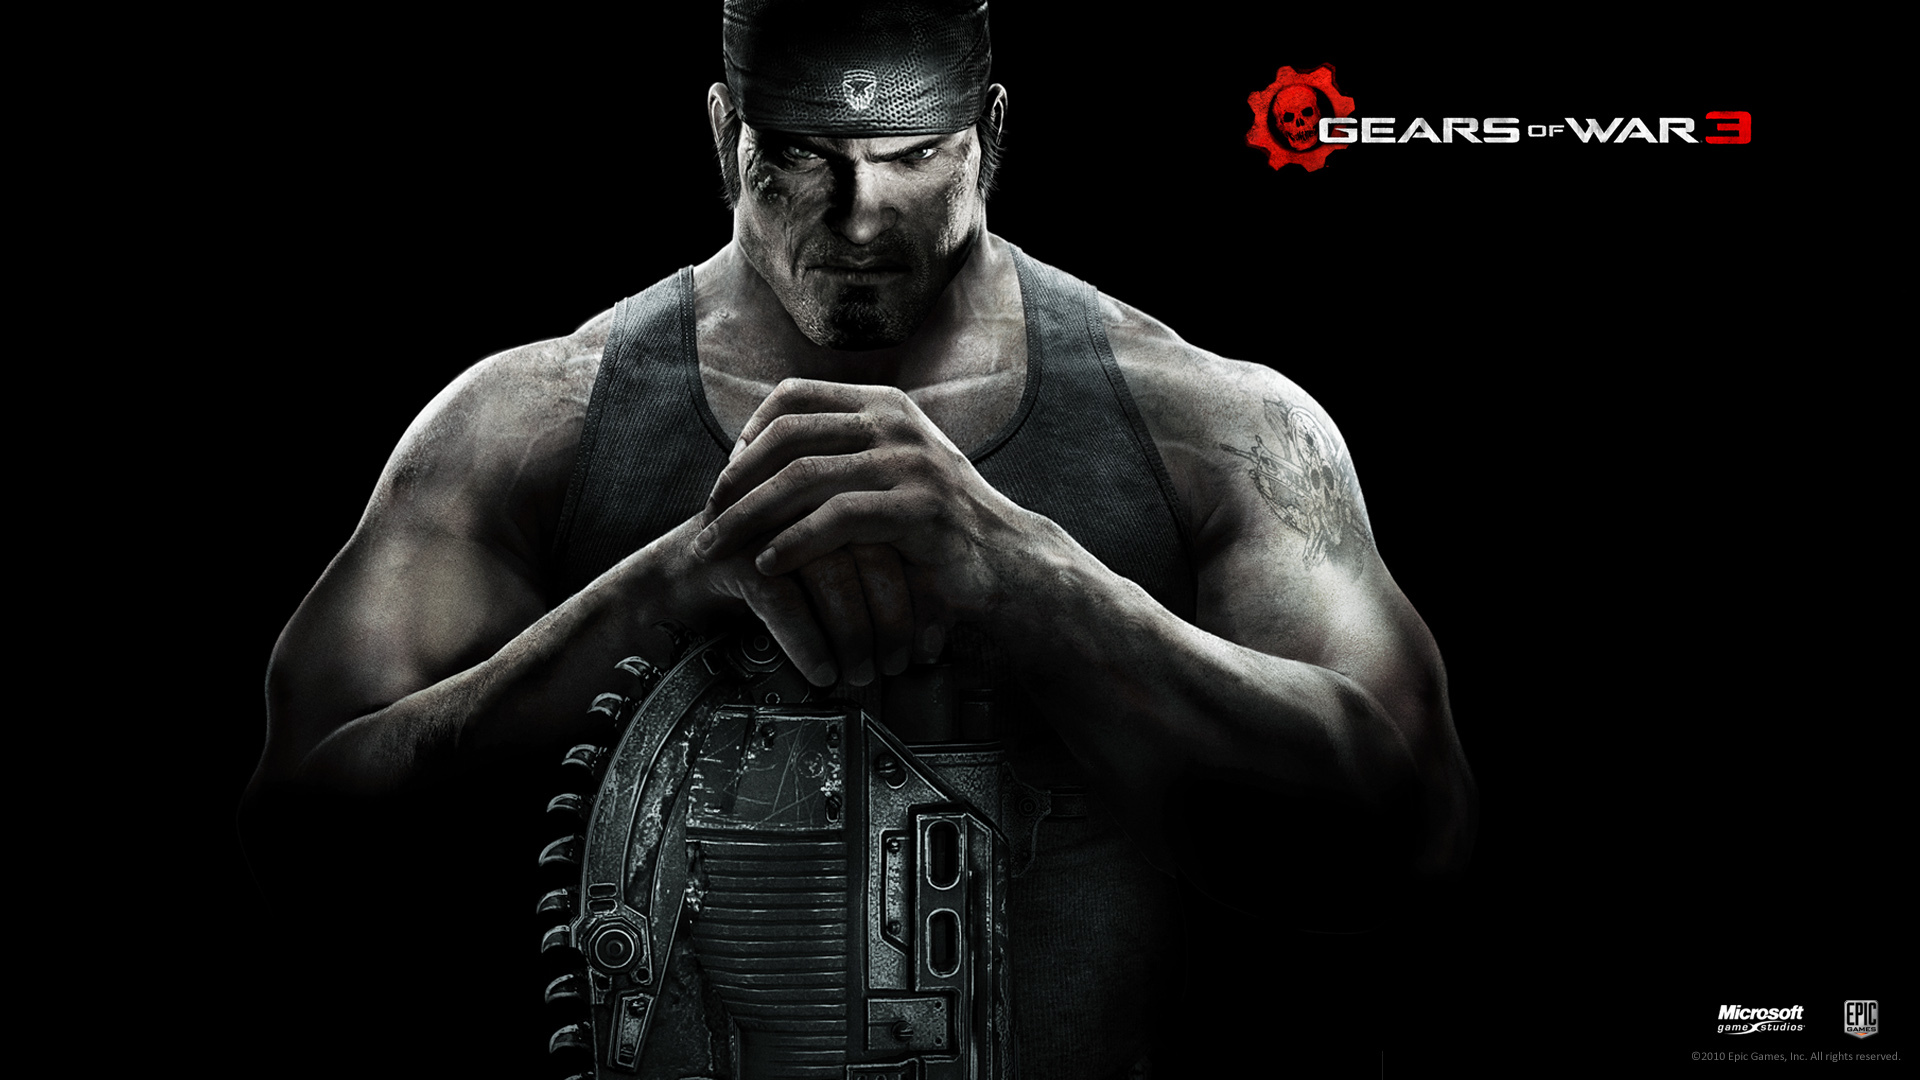 Gears of War 3 desktop wallpaper showcasing a captivating video game scene.